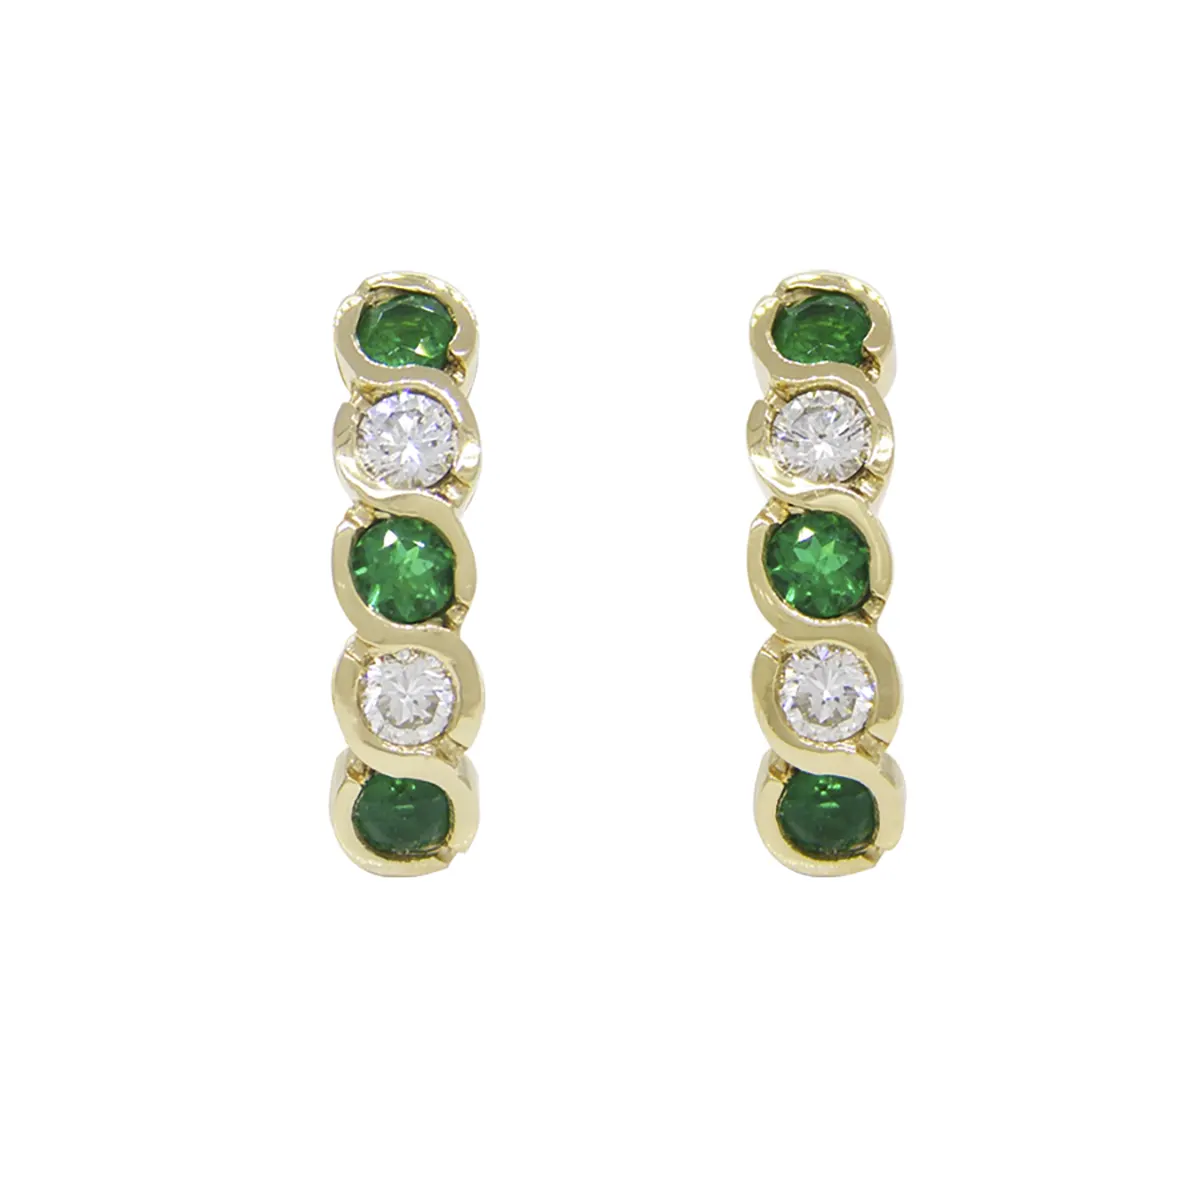 drop-emerald-and-diamond-earrings-in-18k-yellow-gold-clip-backs